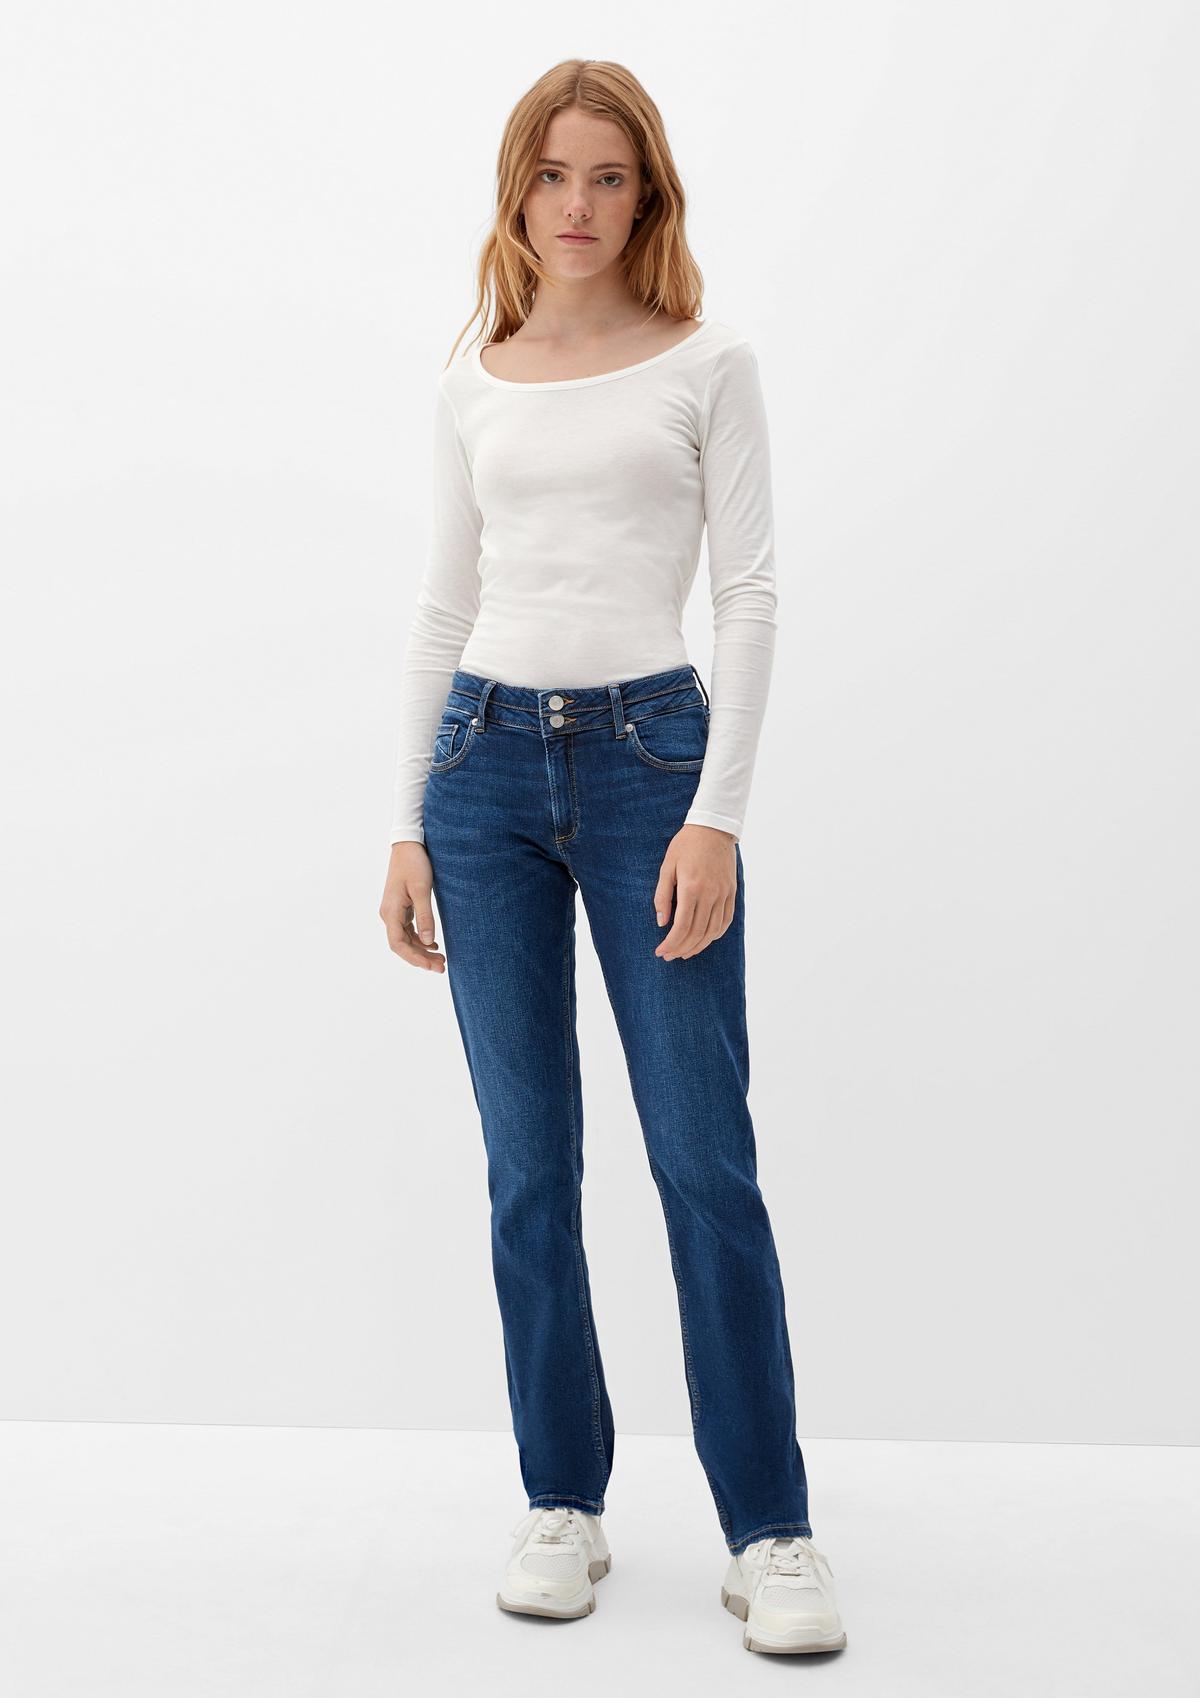 Jeans Catie / Slim Fit / Mid Rise / Straight Leg